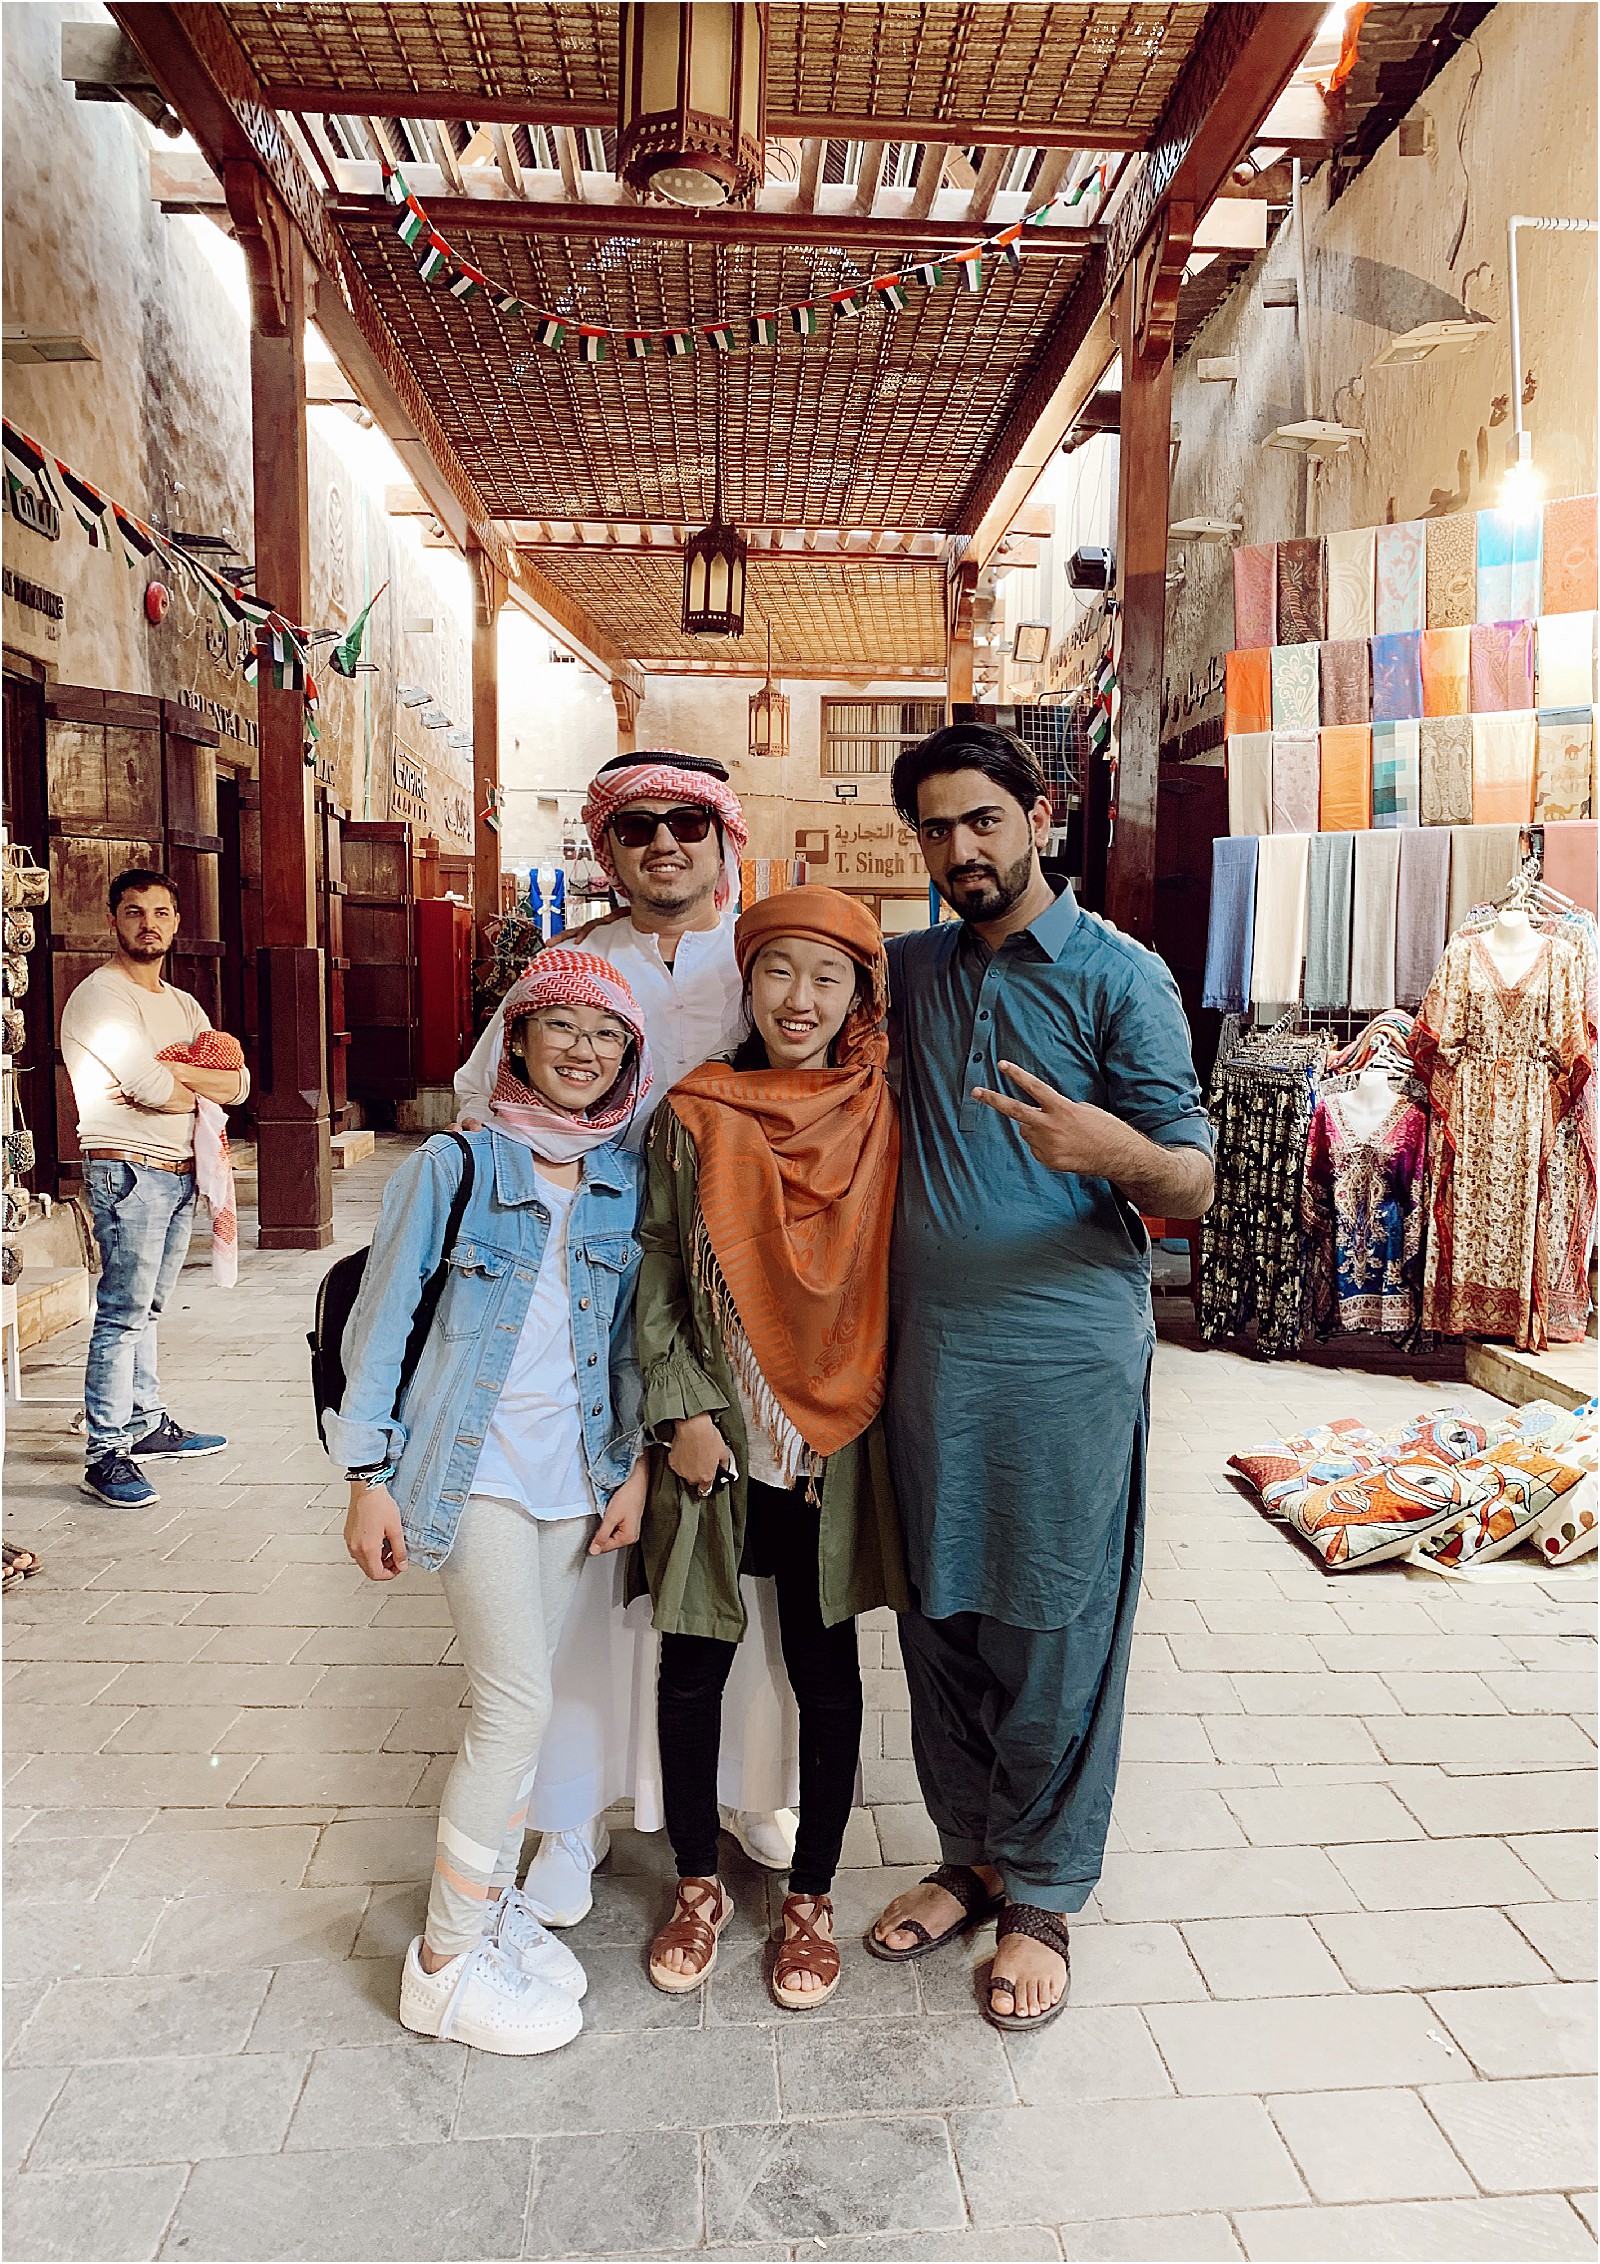 Tourists in Emirati clothing